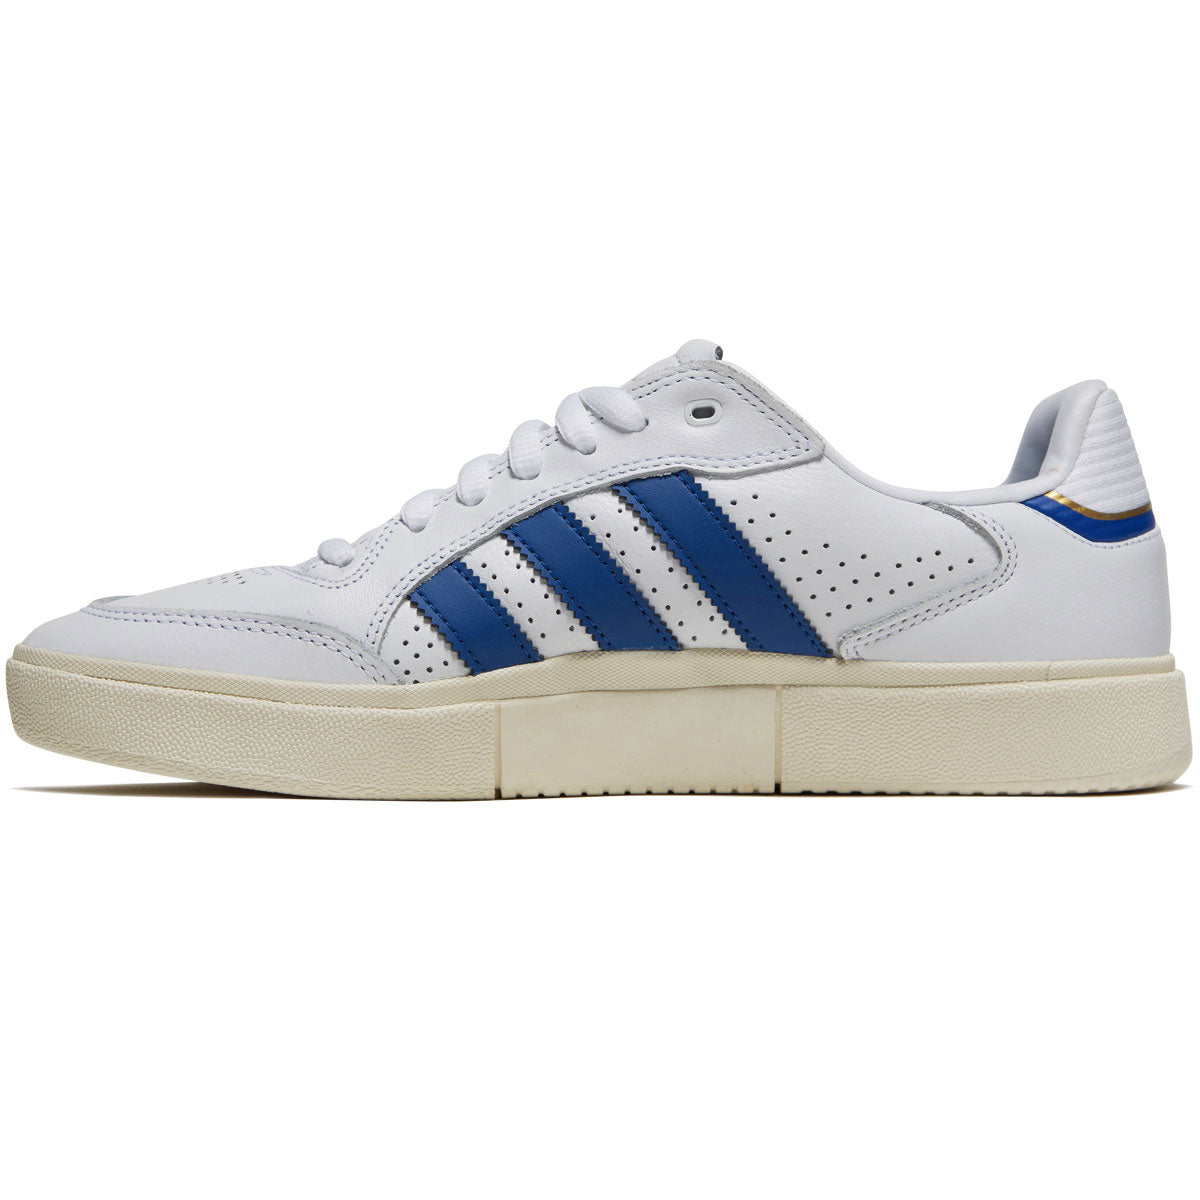 Adidas Tyshawn Low Shoes - White/Royal Blue/Chalk White image 2